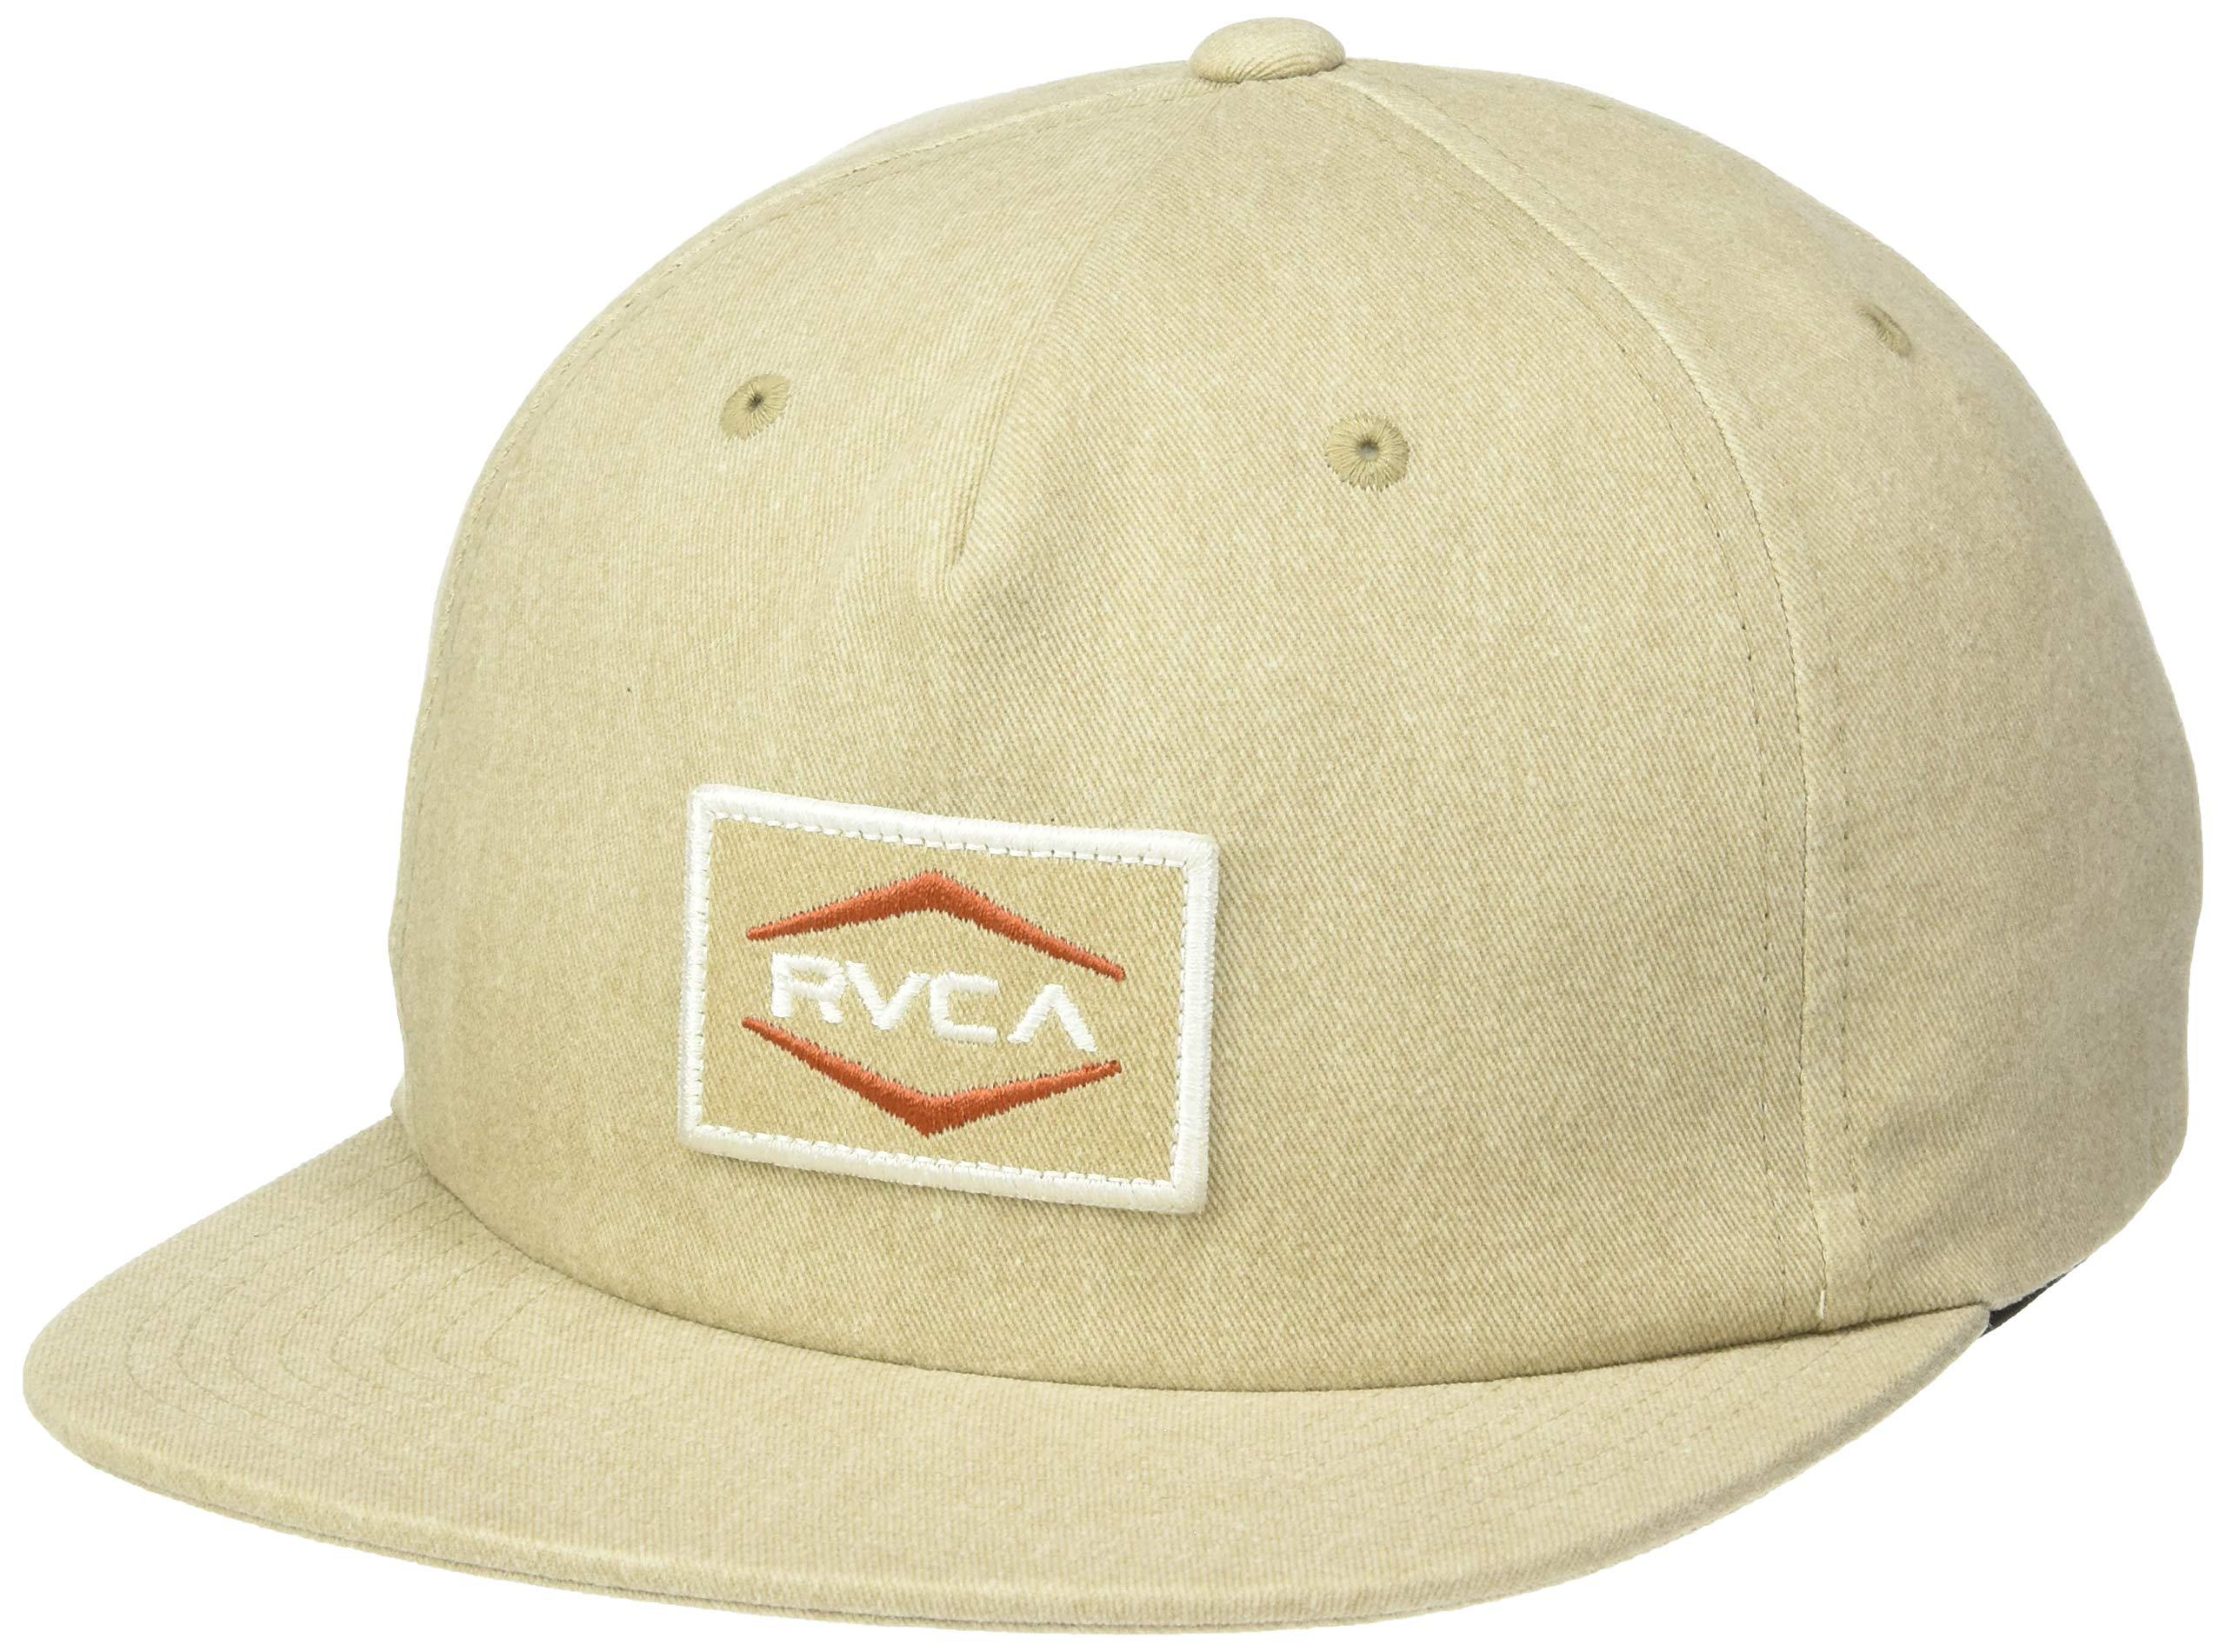 RVCA Pints Snapback Hat